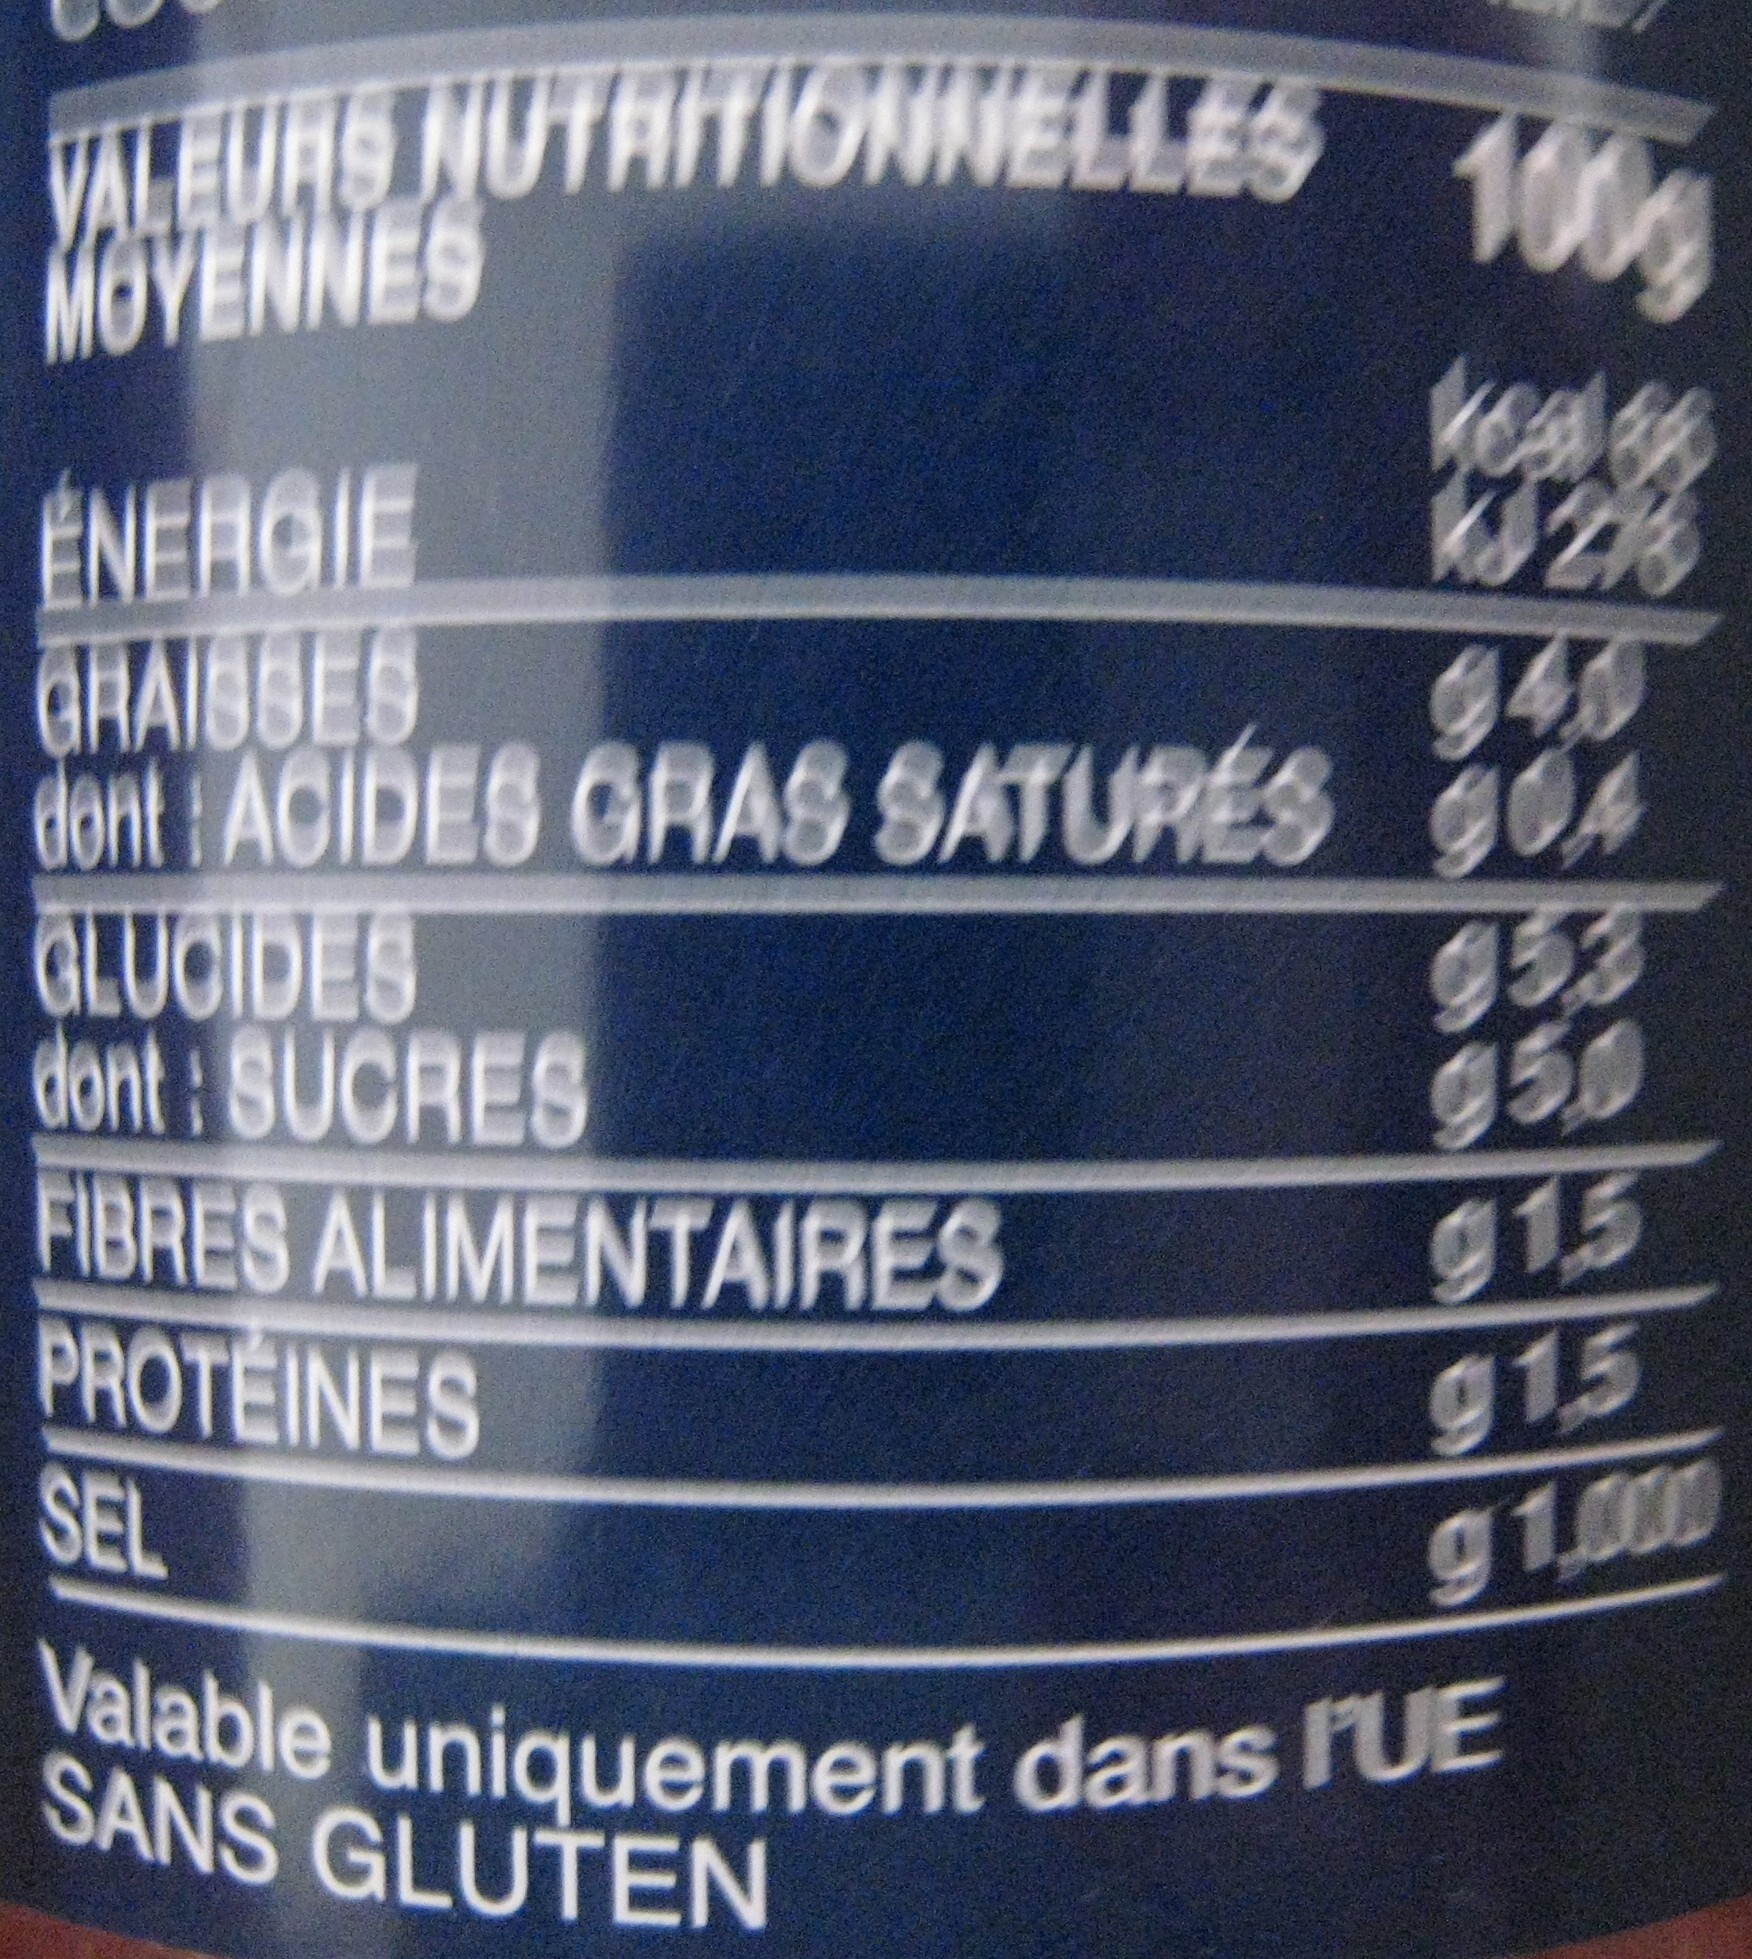 Bundle provencale 400gx2 francia - Voedingswaarden - fr